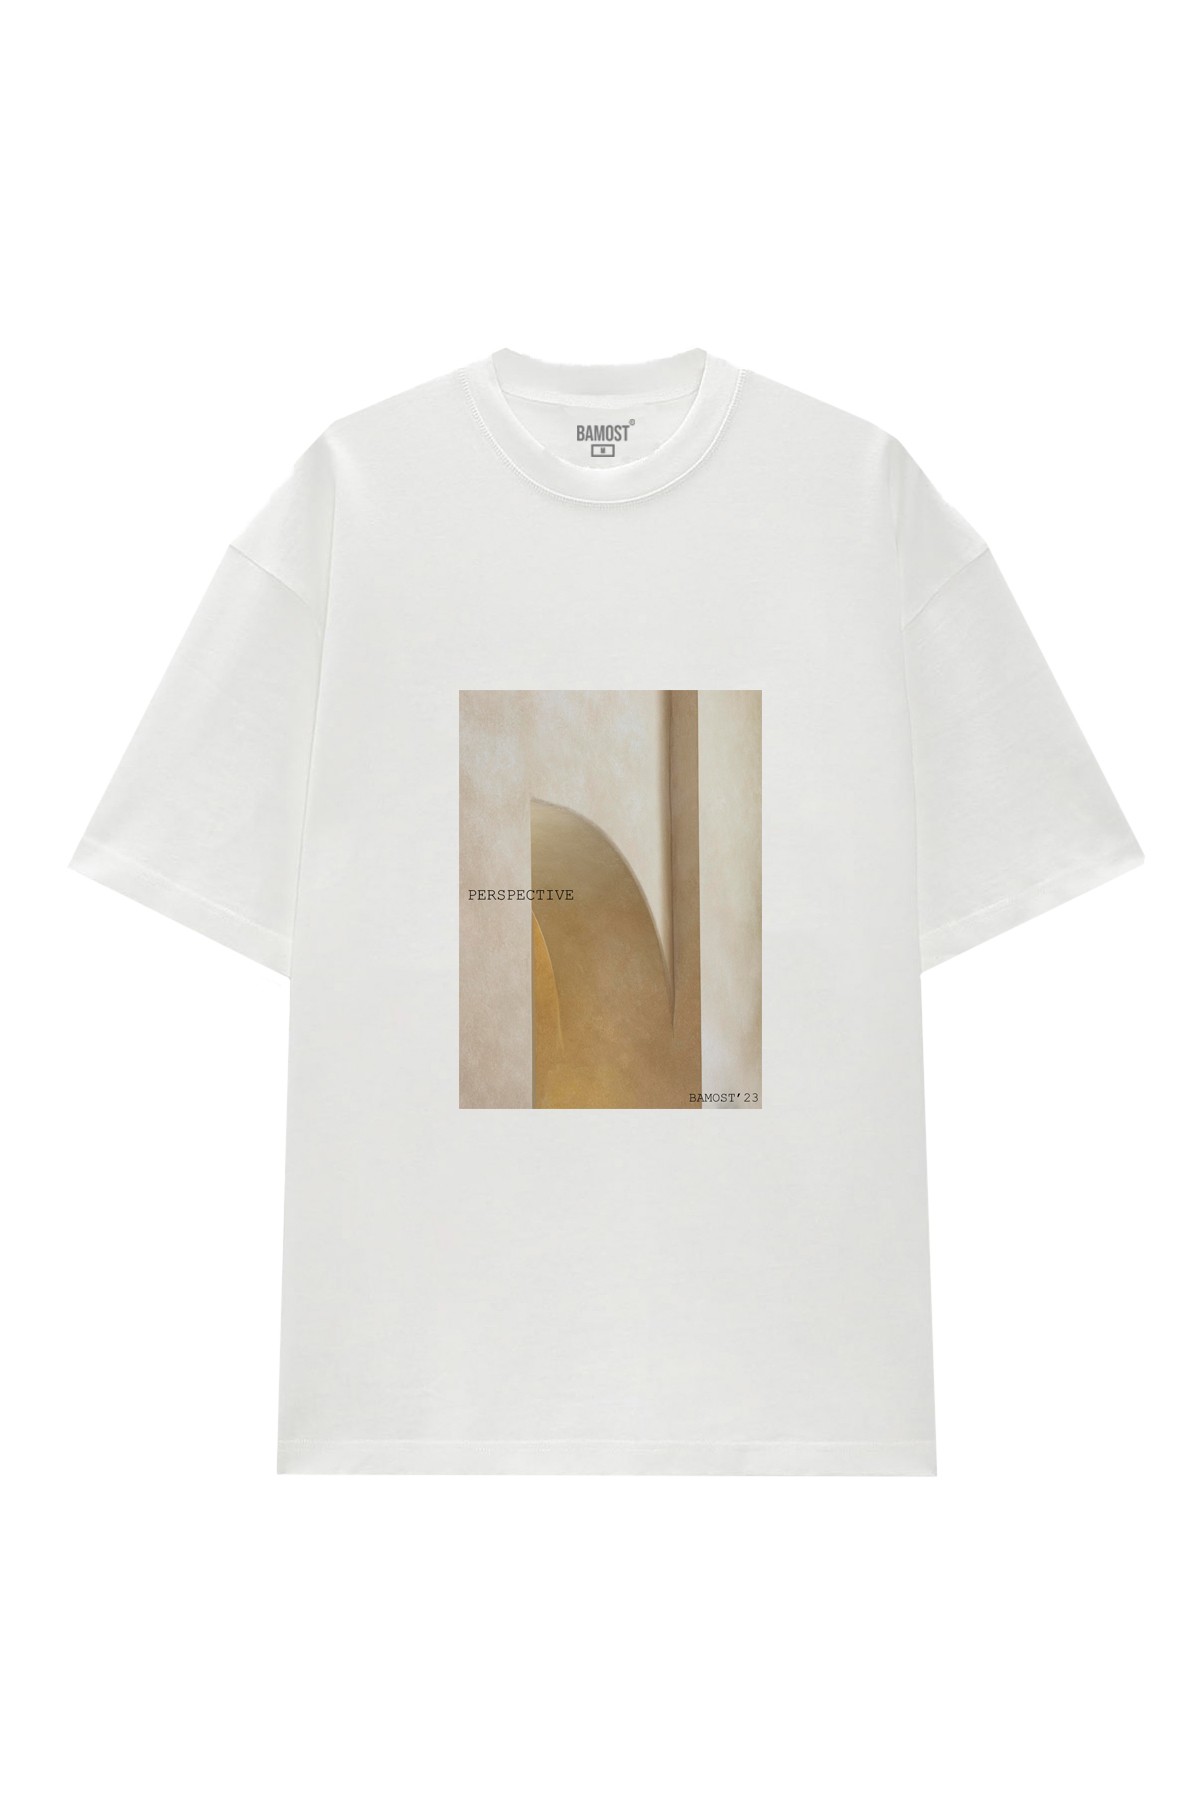 Perspective'6 - Unisex Oversize T-Shirt - WHITE